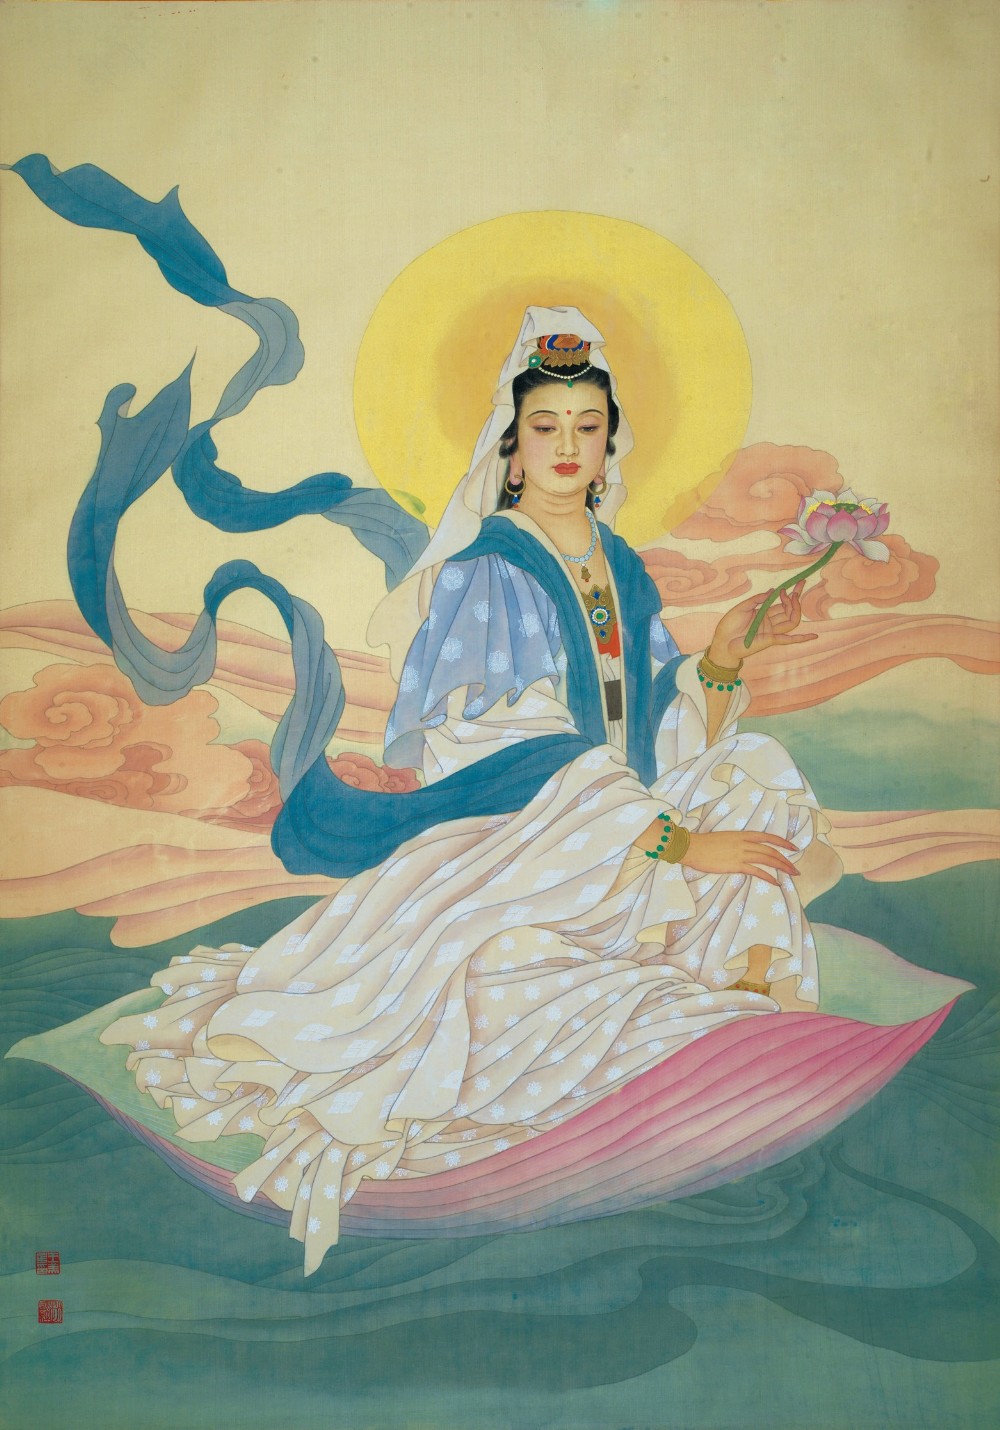 ZHAO GUOJING & WANG MEIFANG, GUANYIN (AVALOKITESVARA), Coloured on silk, Framed. 120 cm × 80 cm